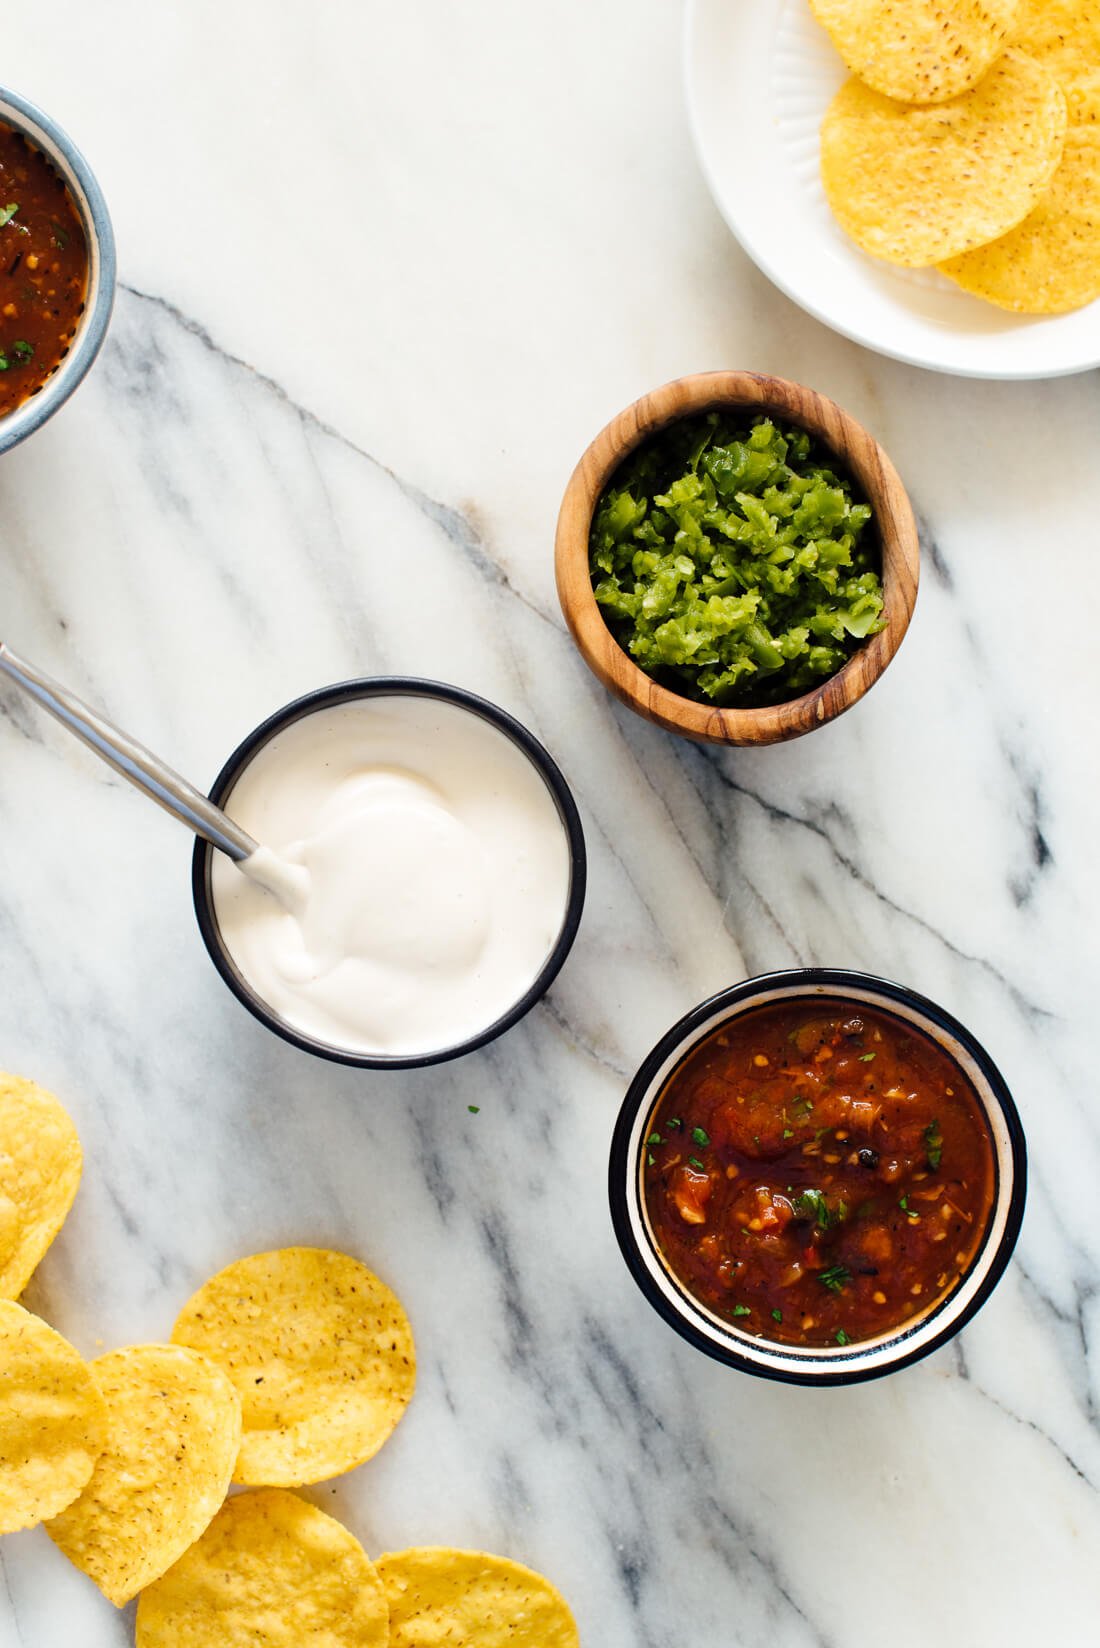 Homemade jalapeño relish with chips and dips #jalapenorelish